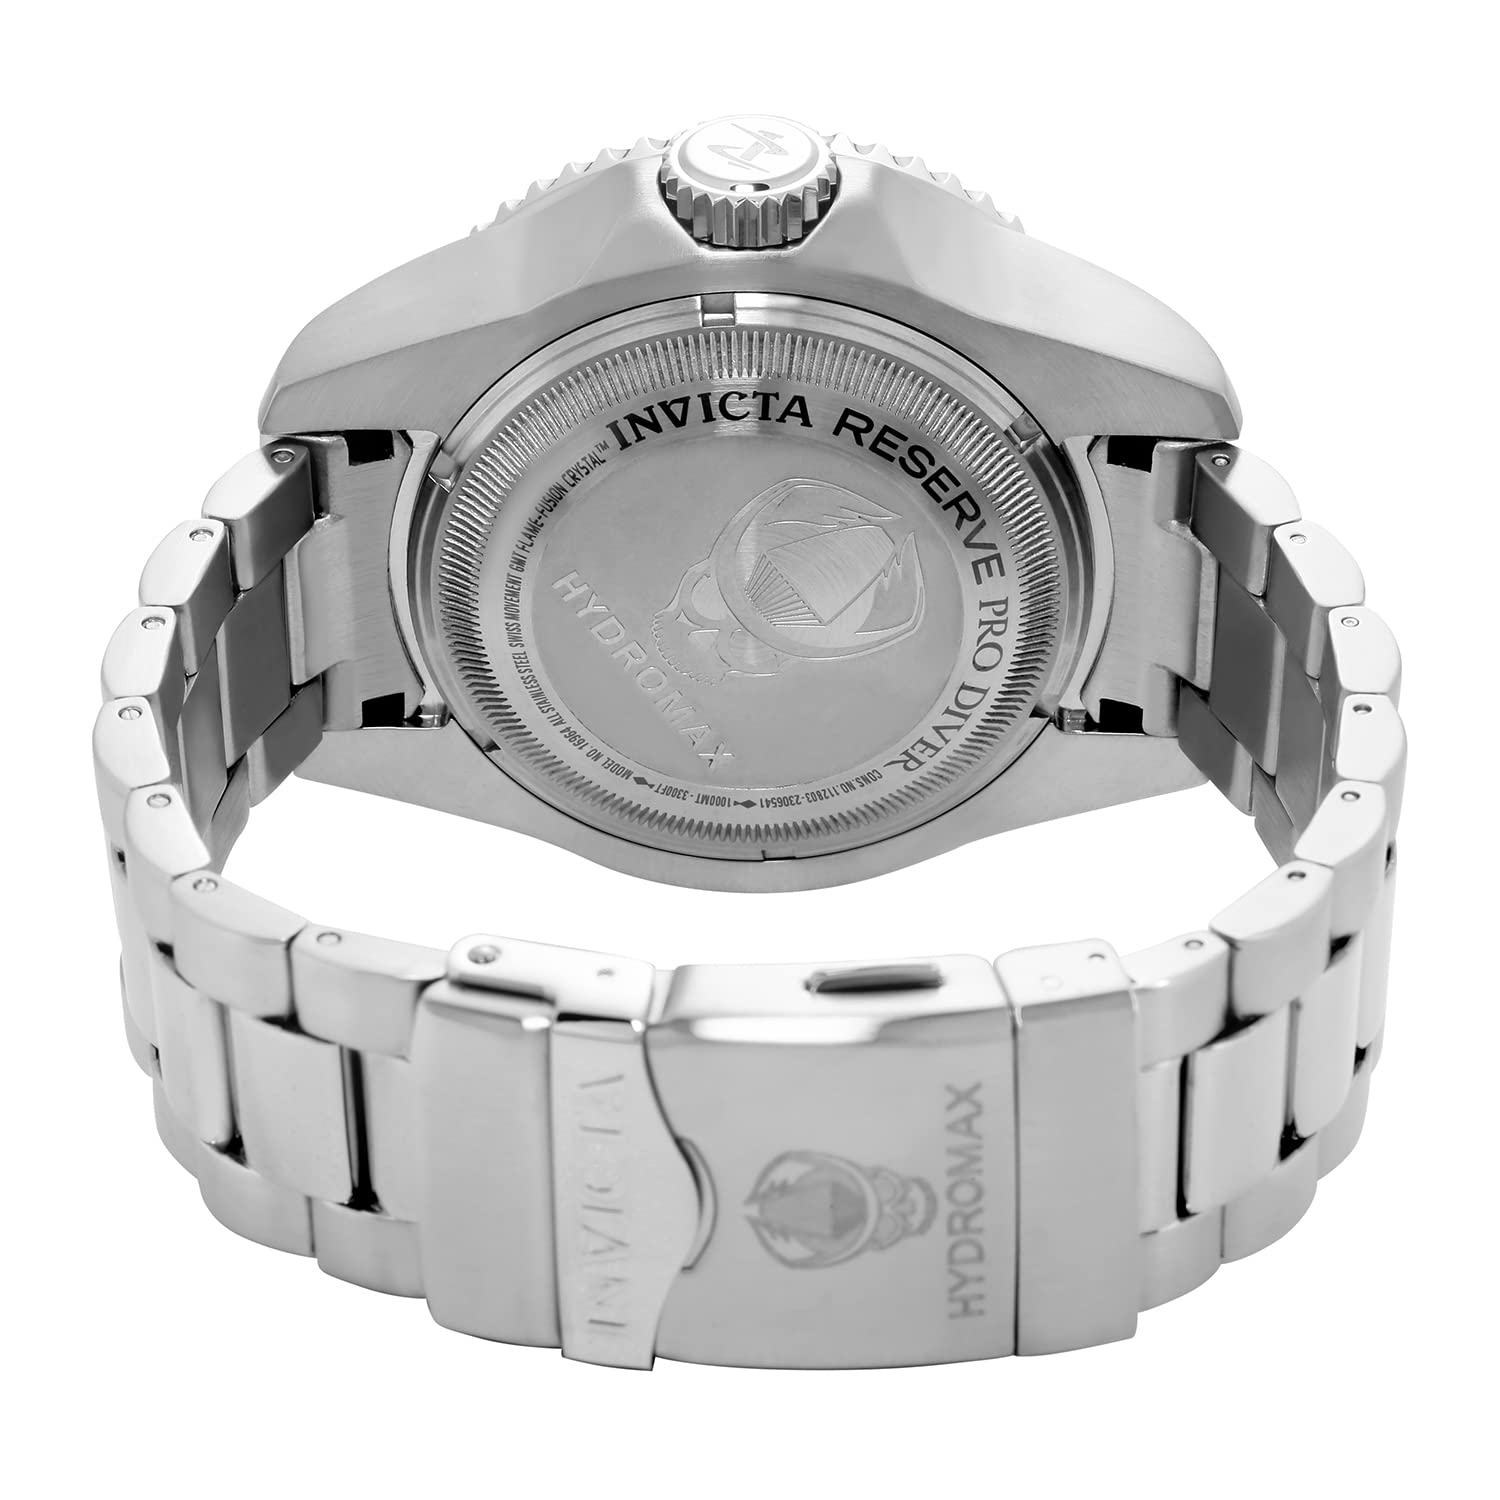 Invicta Men's 16964 Reserve Analog Display Swiss Quartz Silver Watch